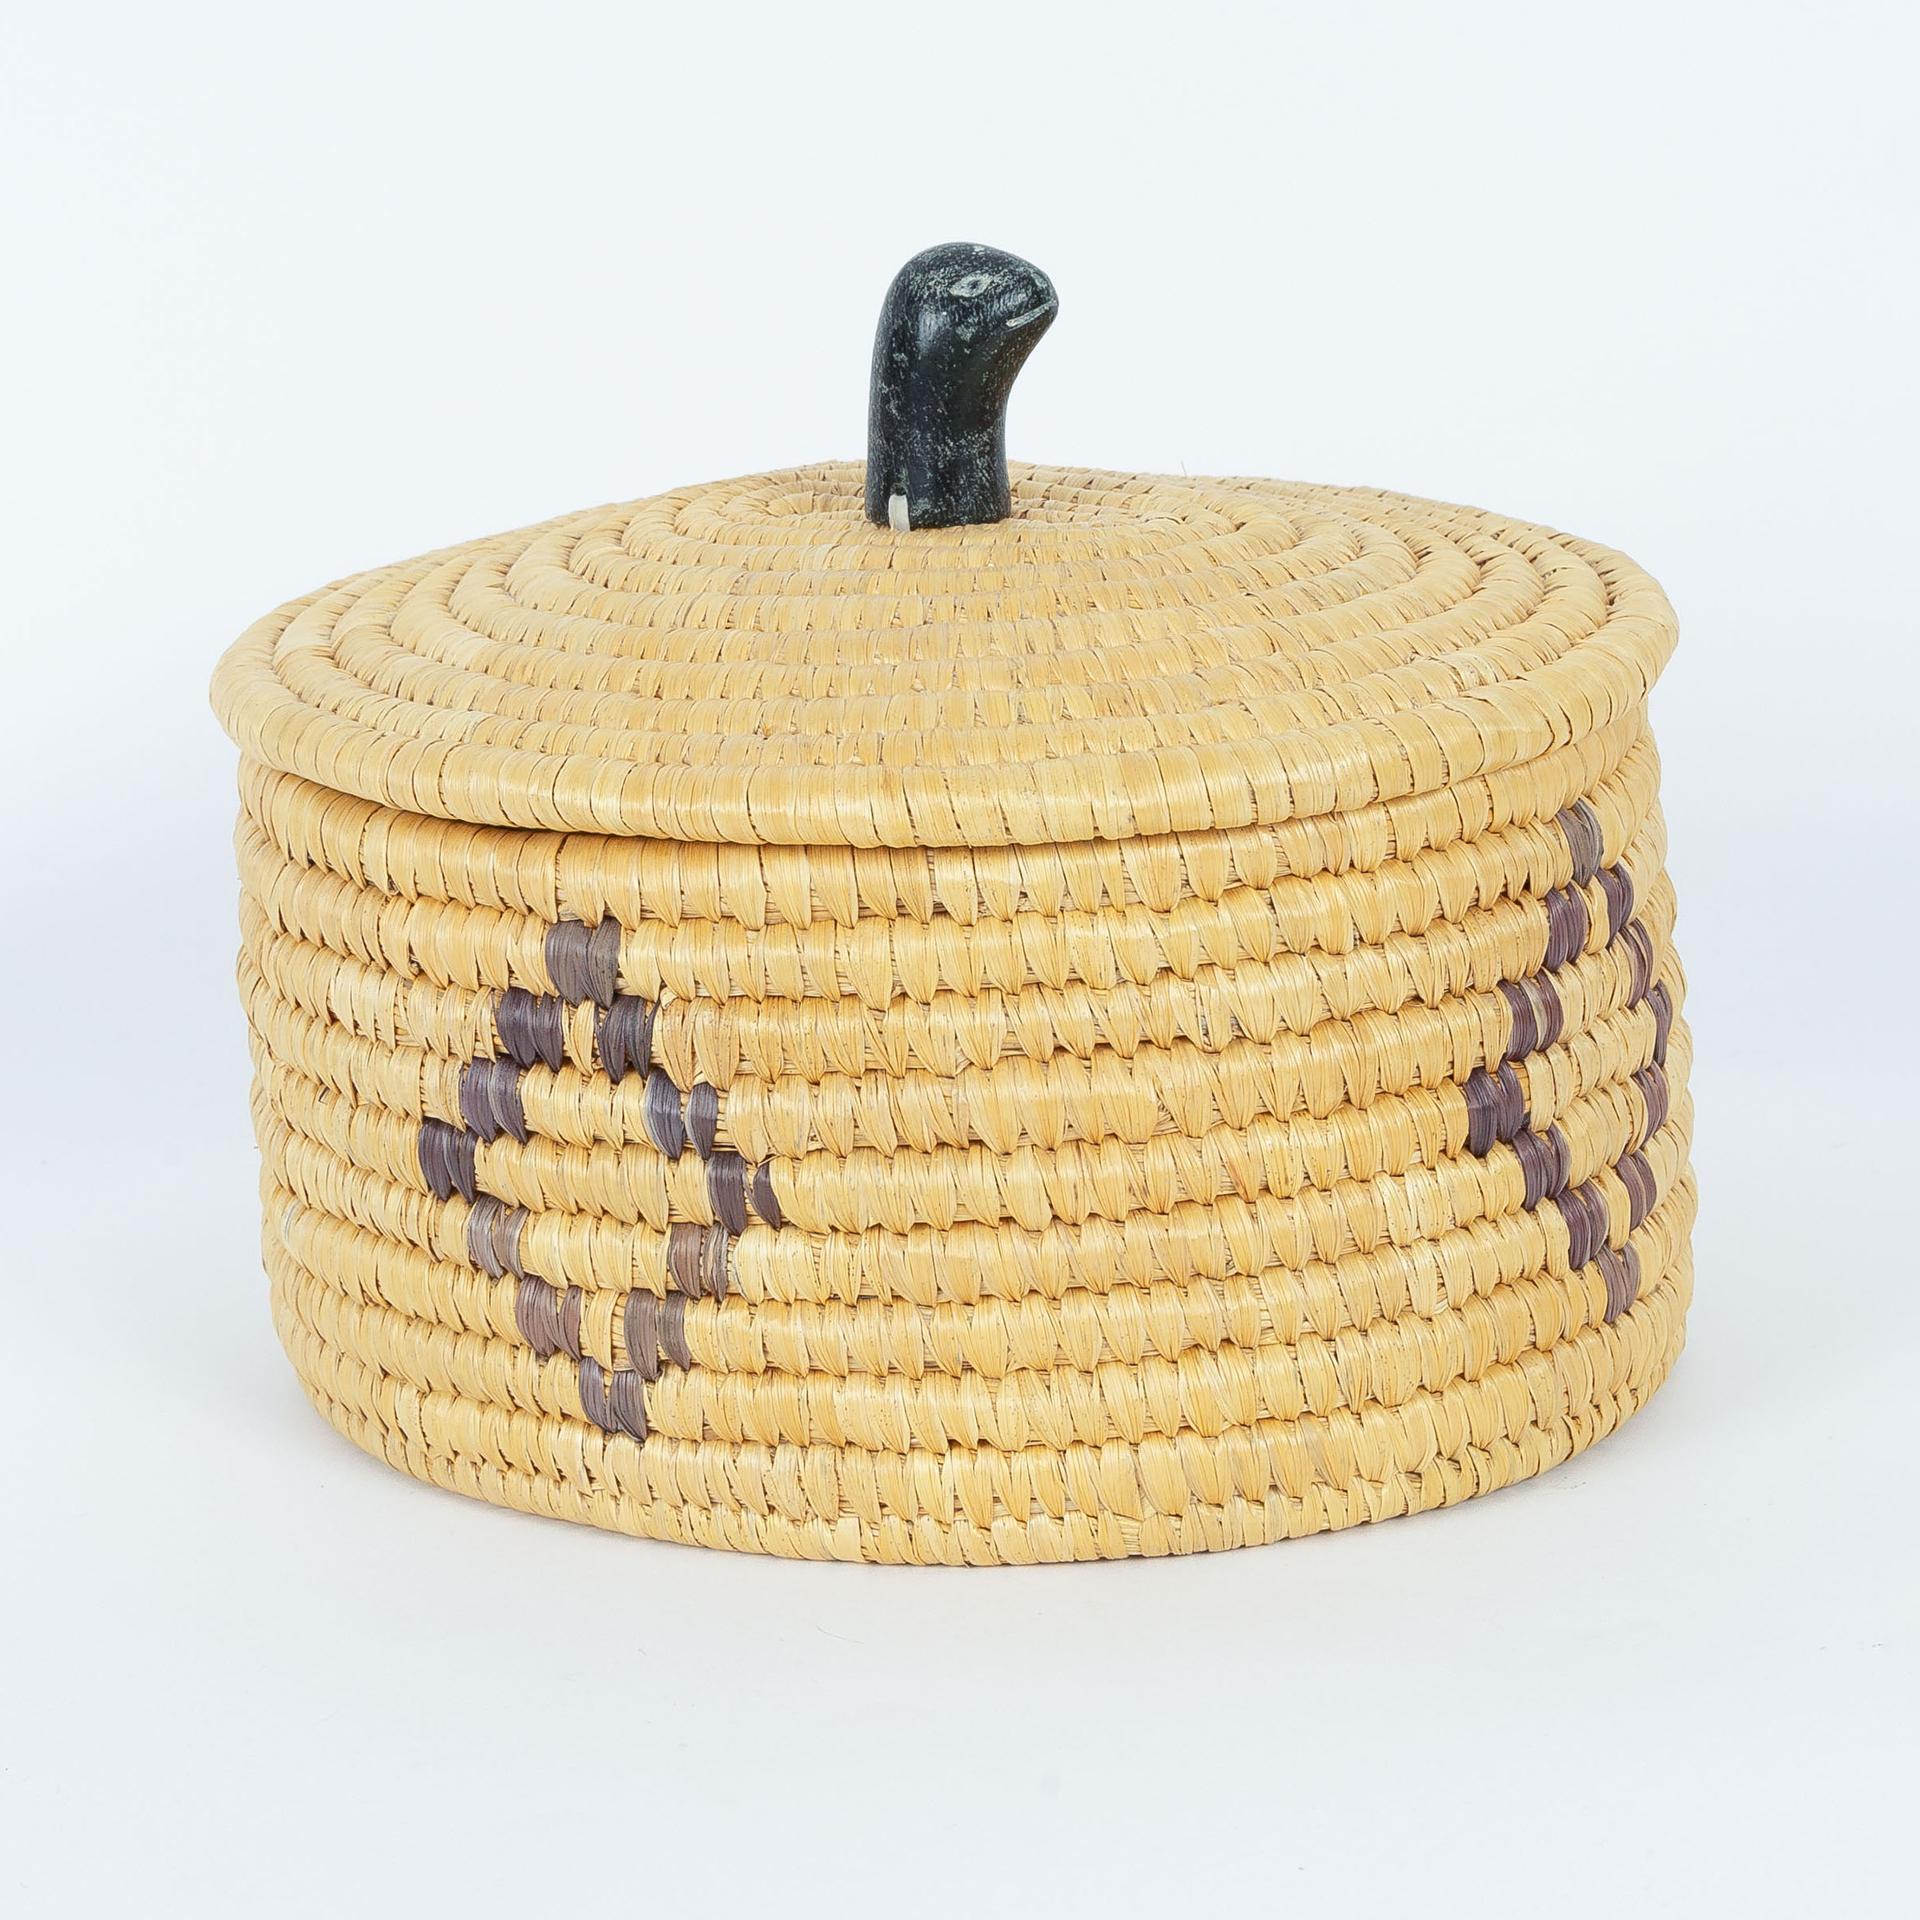 Mary Okara Inukpuk (1930) - A Coiled Lidded Basket With A Seal Knop